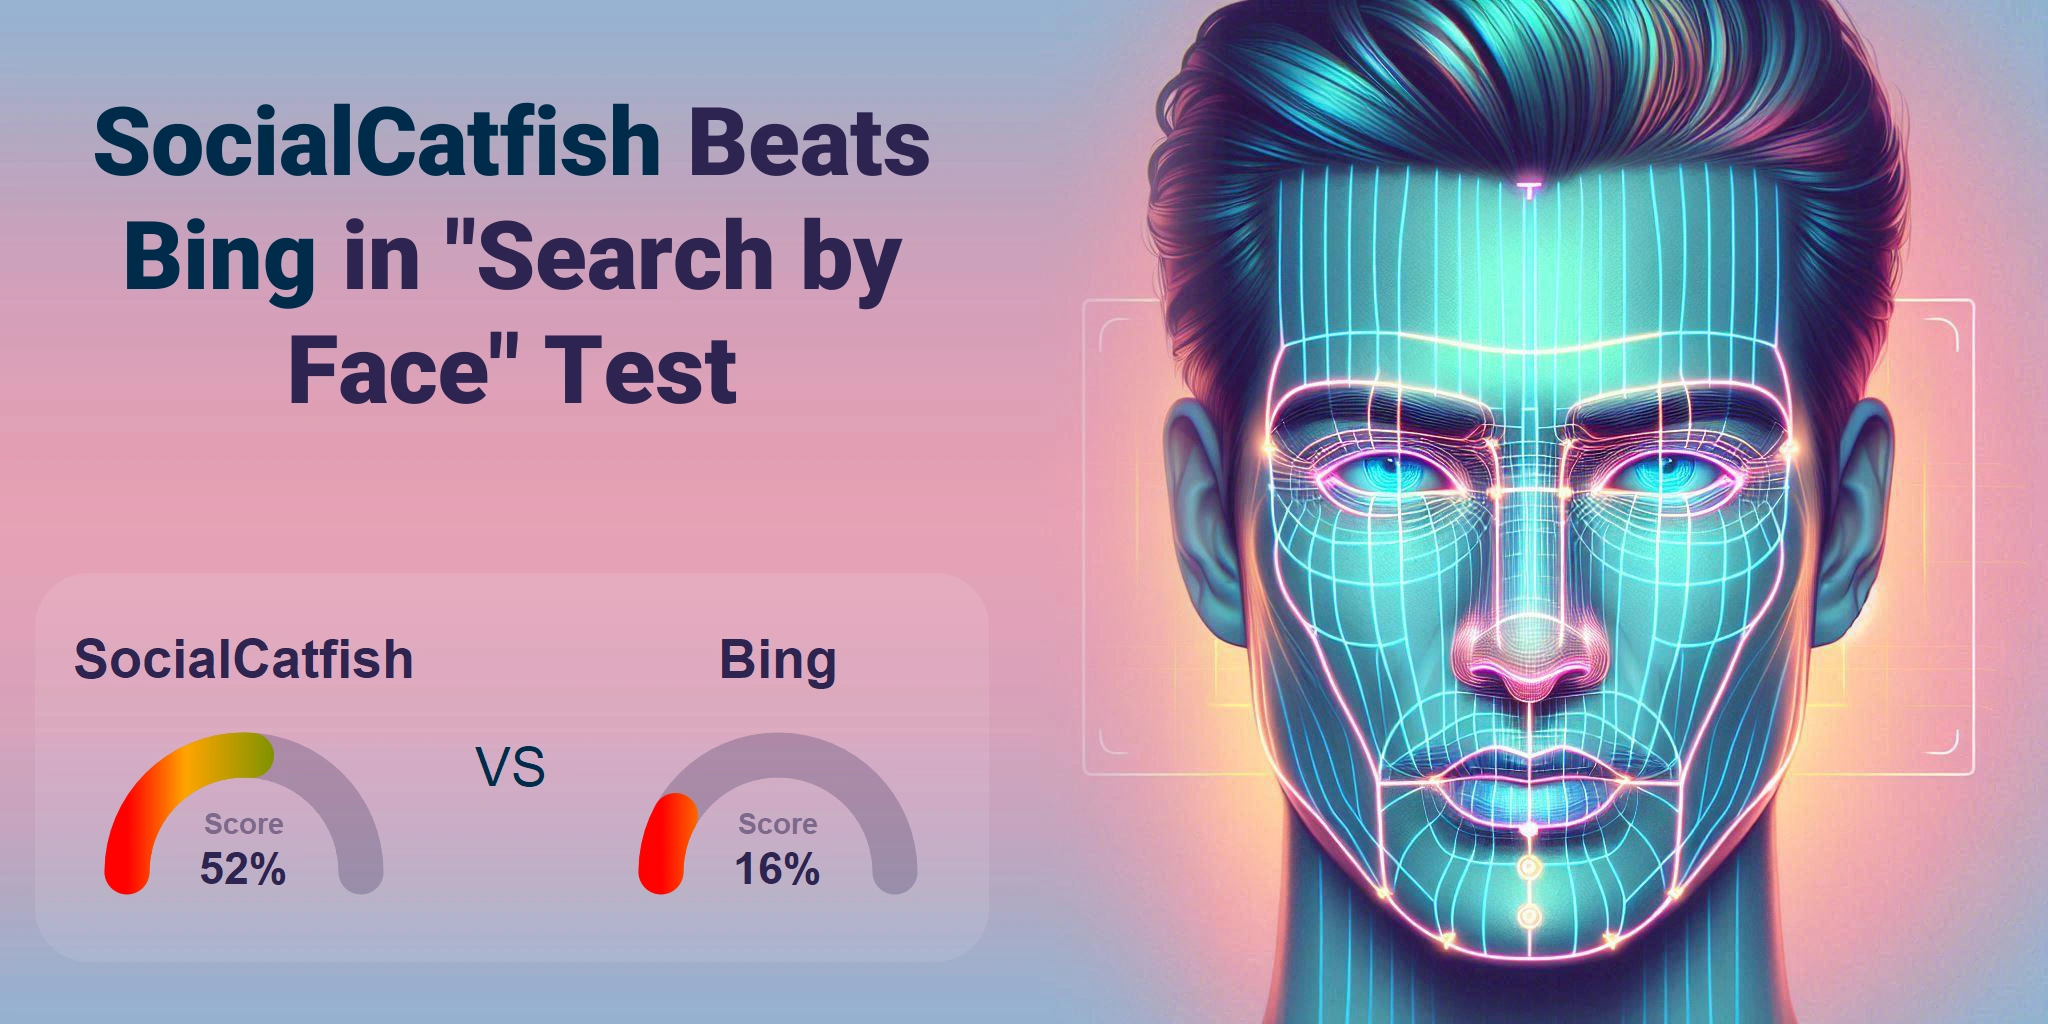 Bing.com vs SocialCatfish.com